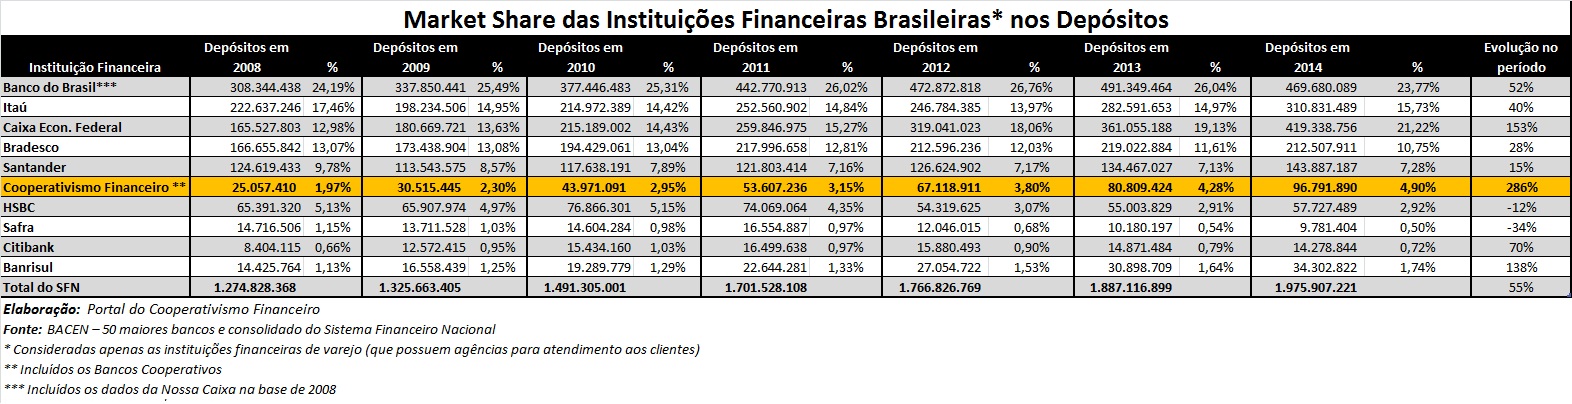 2014-Dados_Cooperativas_Financeiras_depósitos